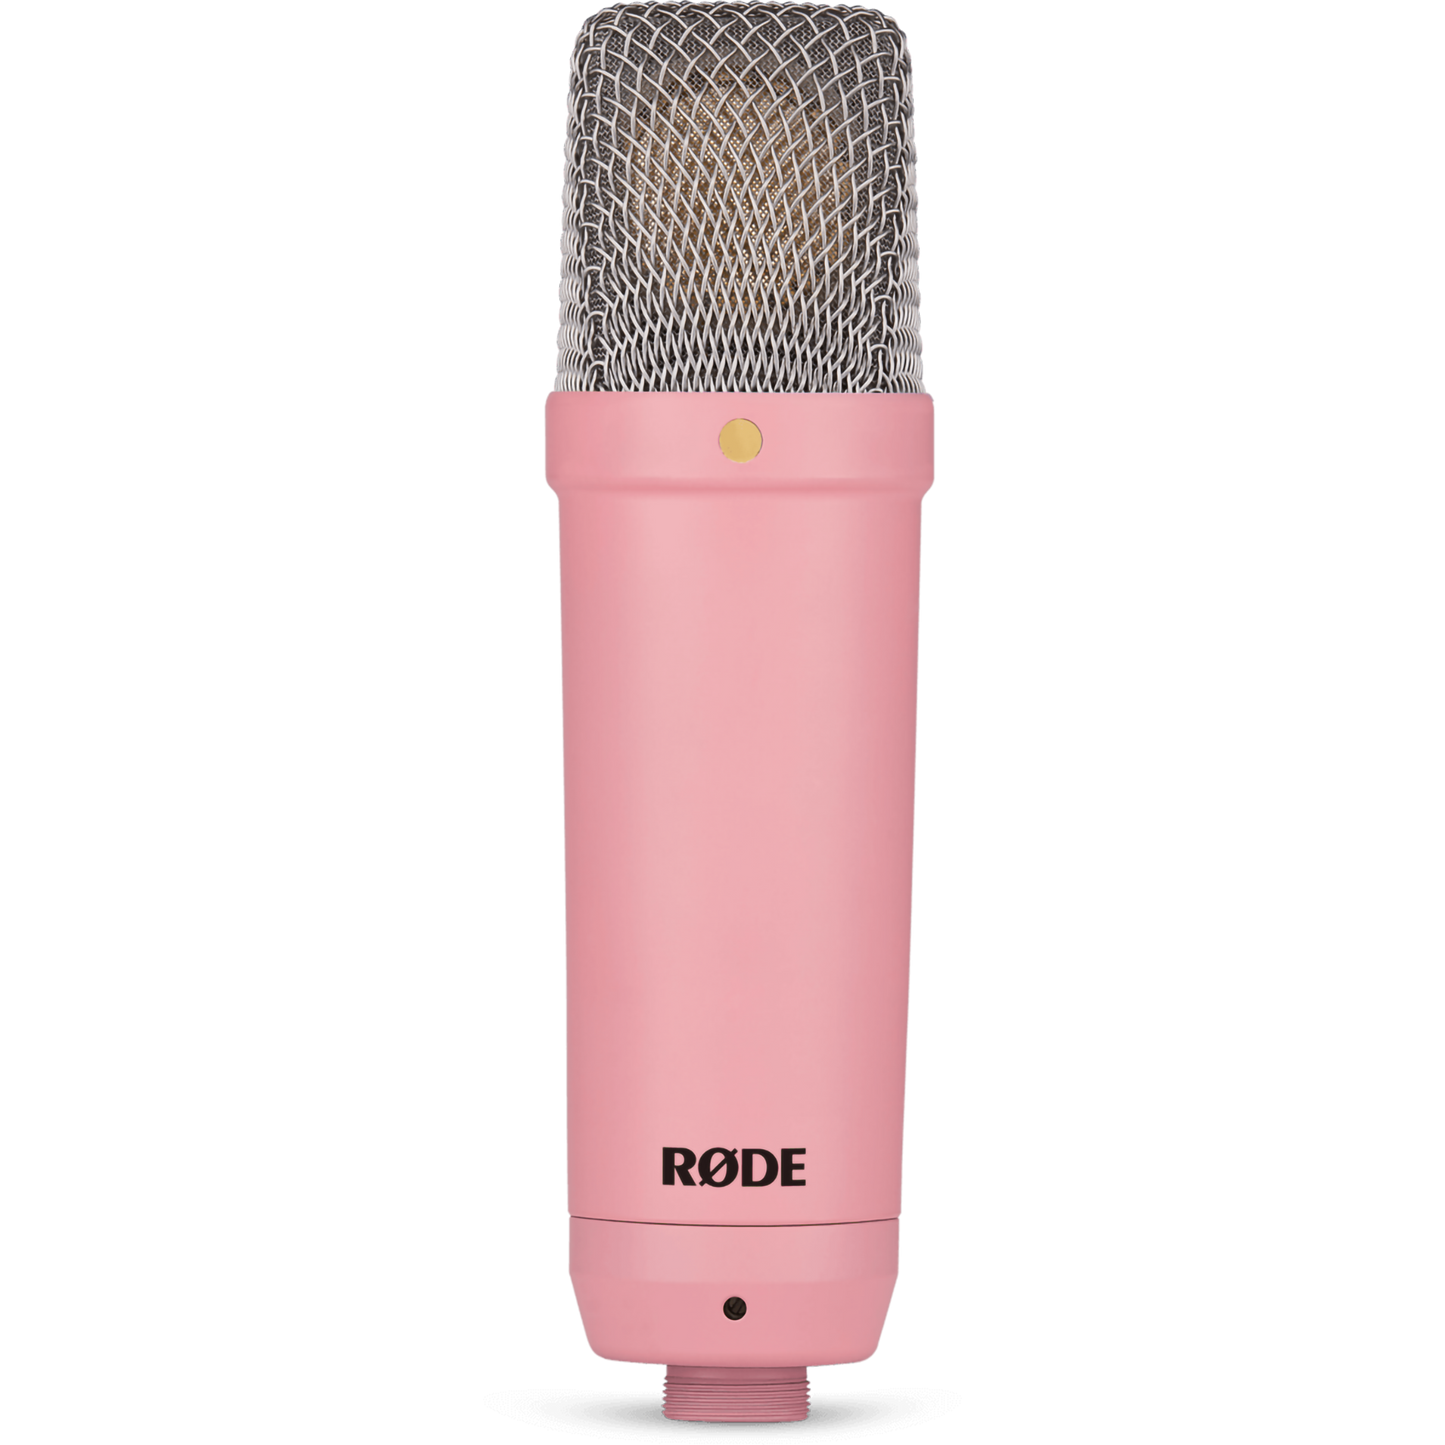 Rode NT1 Signature Series Studio Condenser Microphone, Pink